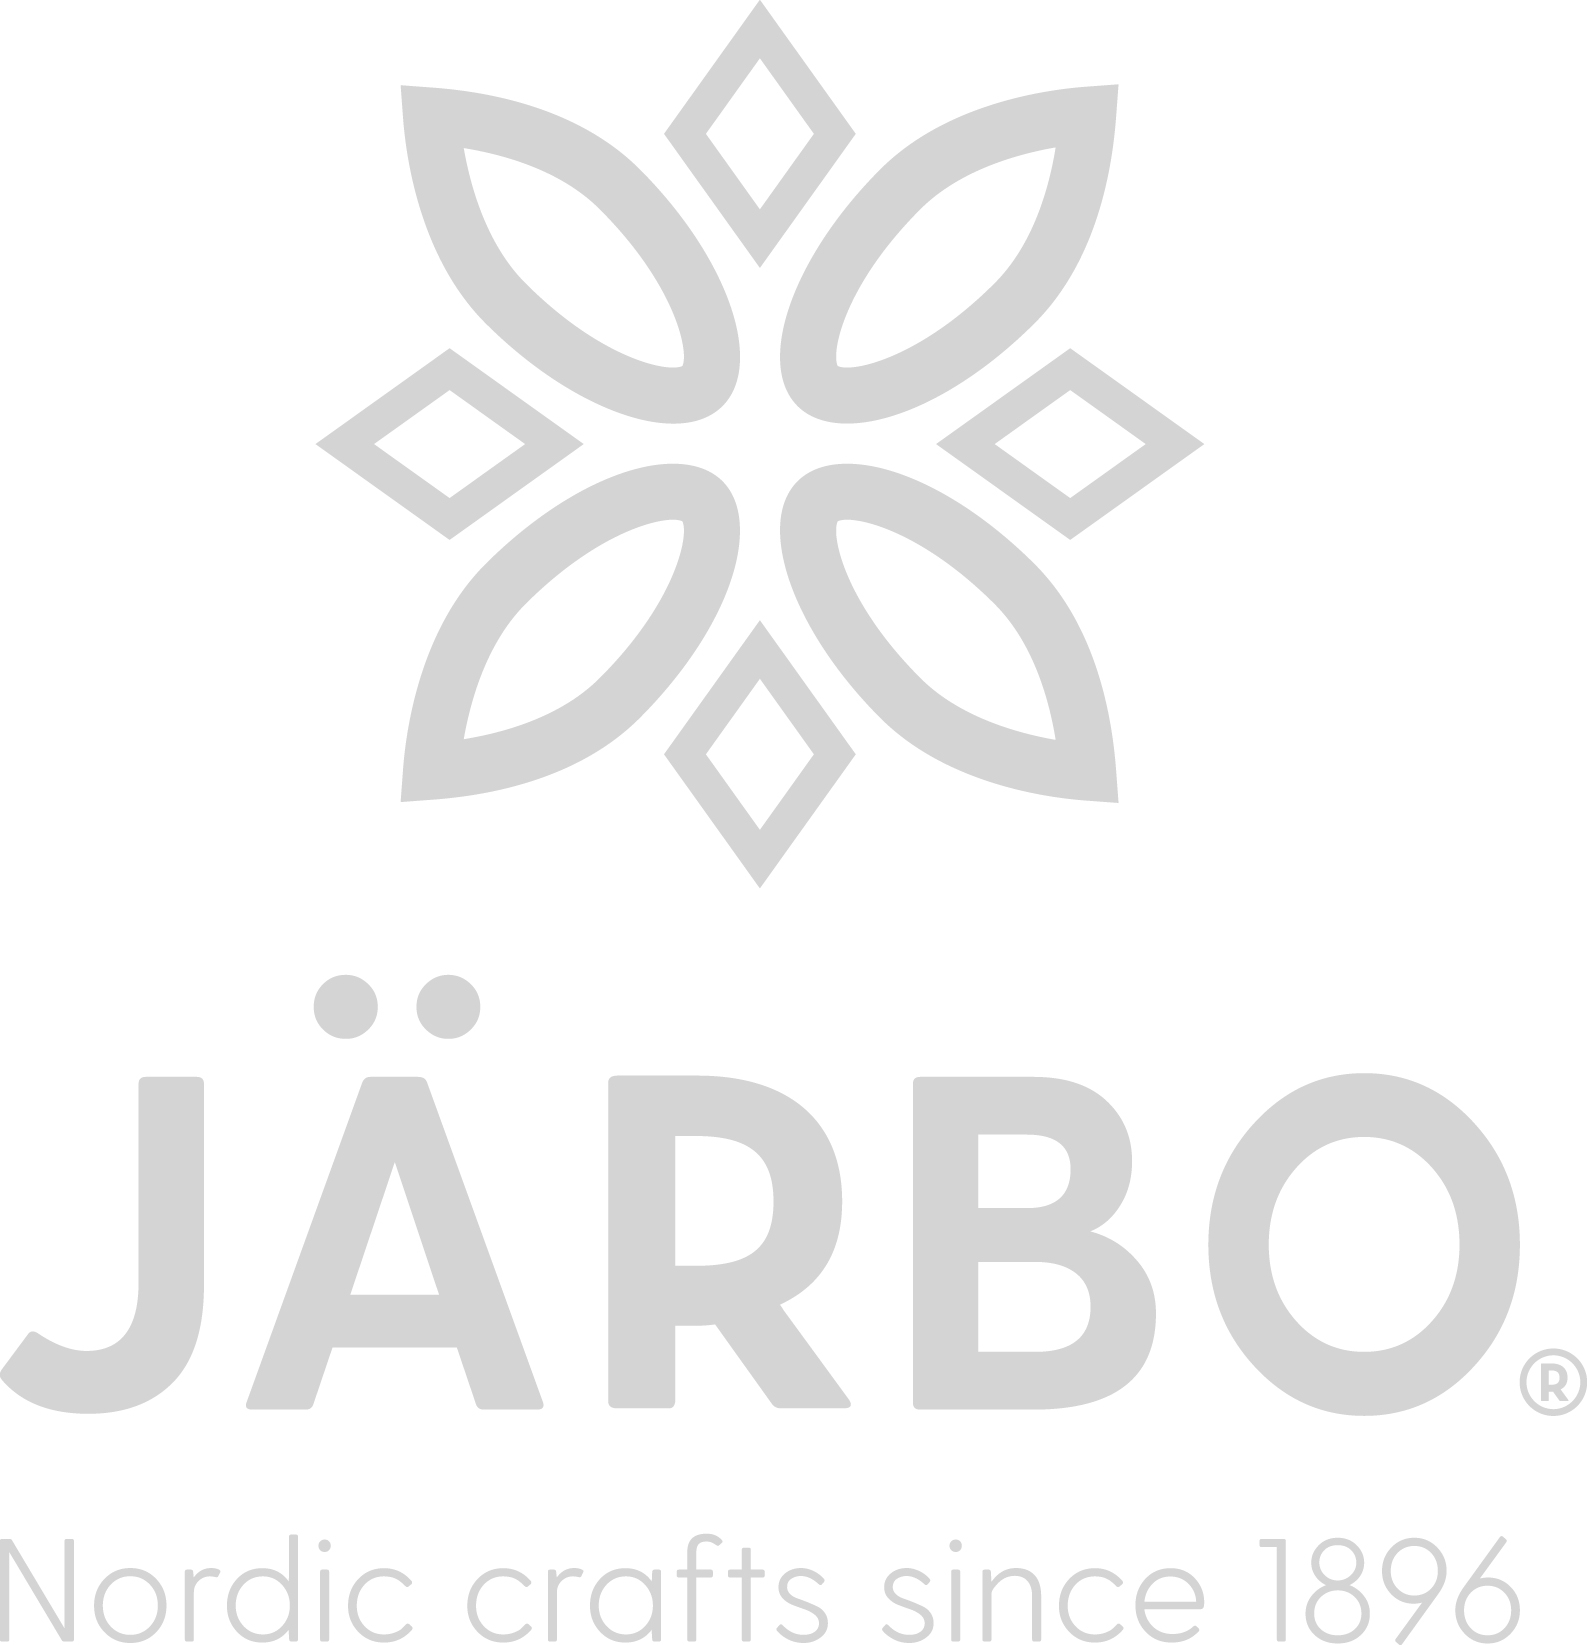 Stickmått Järbo